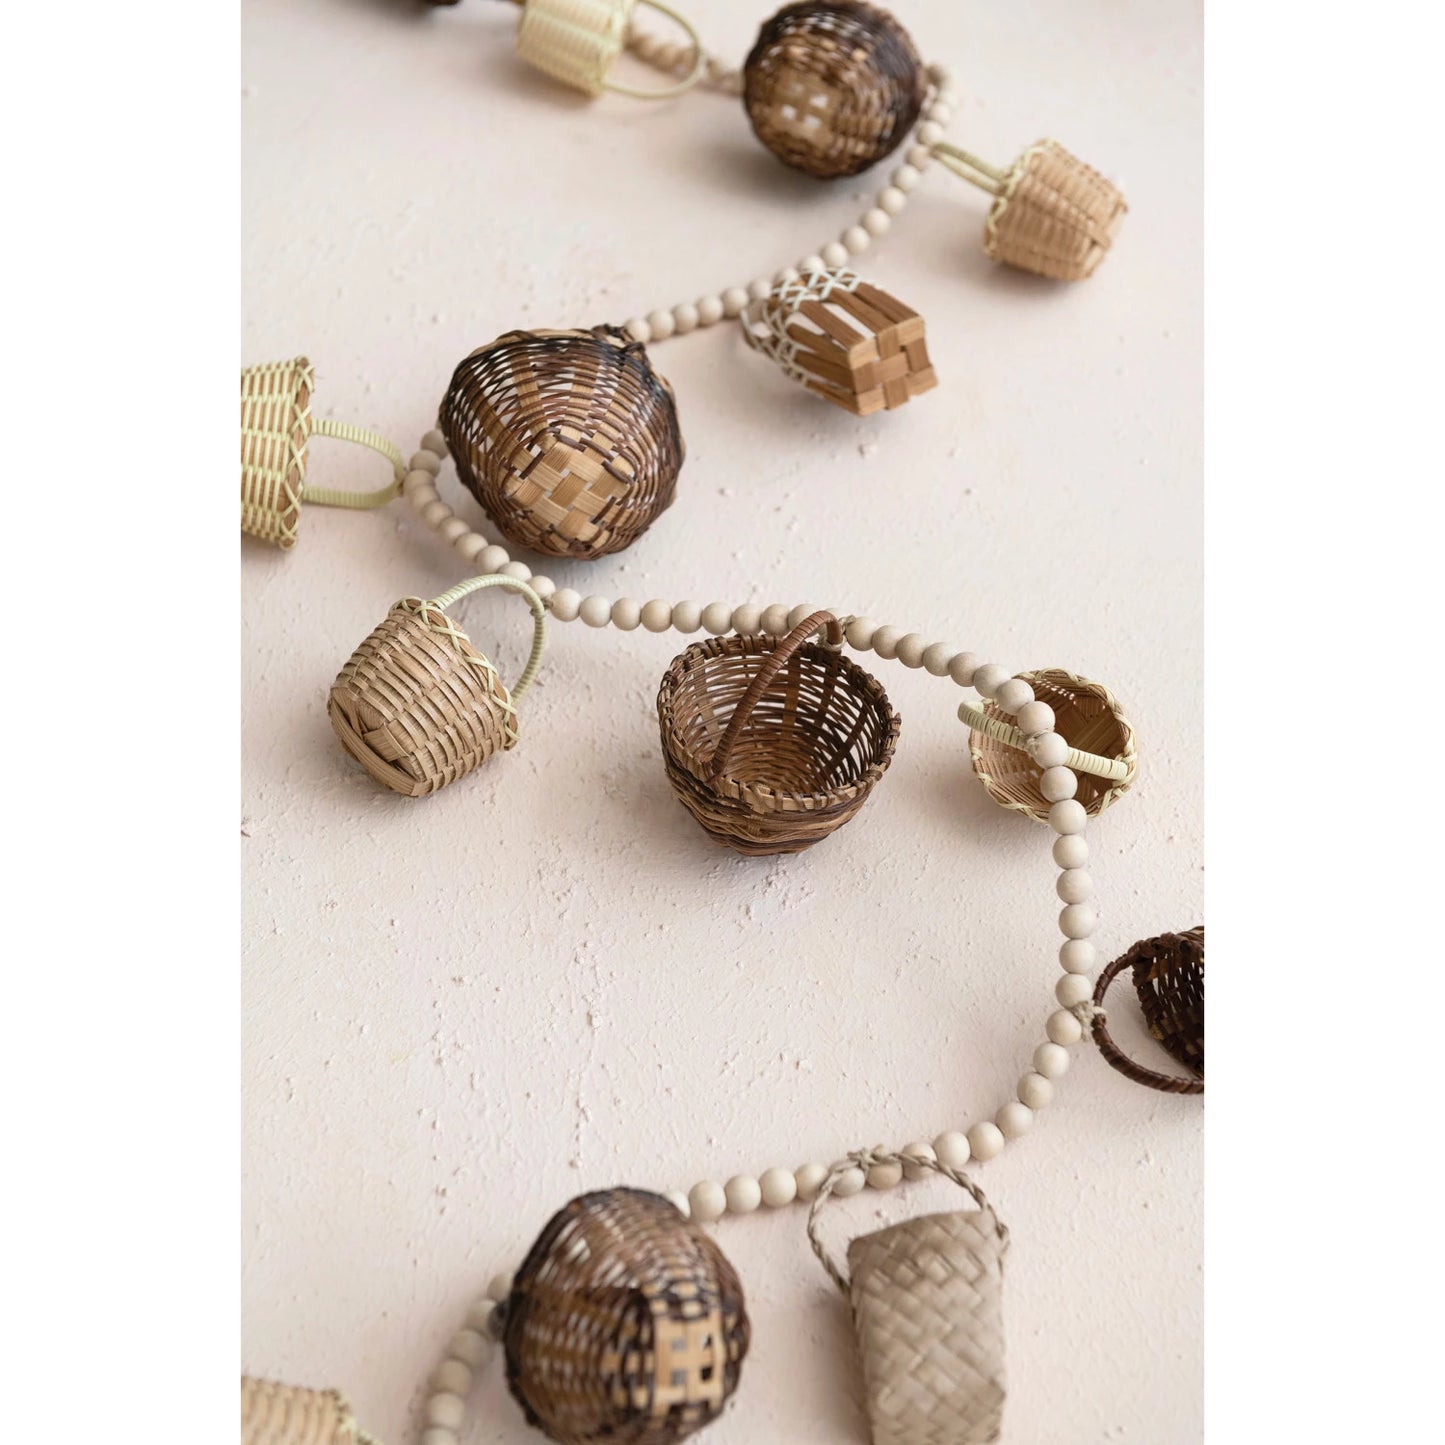 Wicker Garland w/ Mini Baskets & Wood Beads